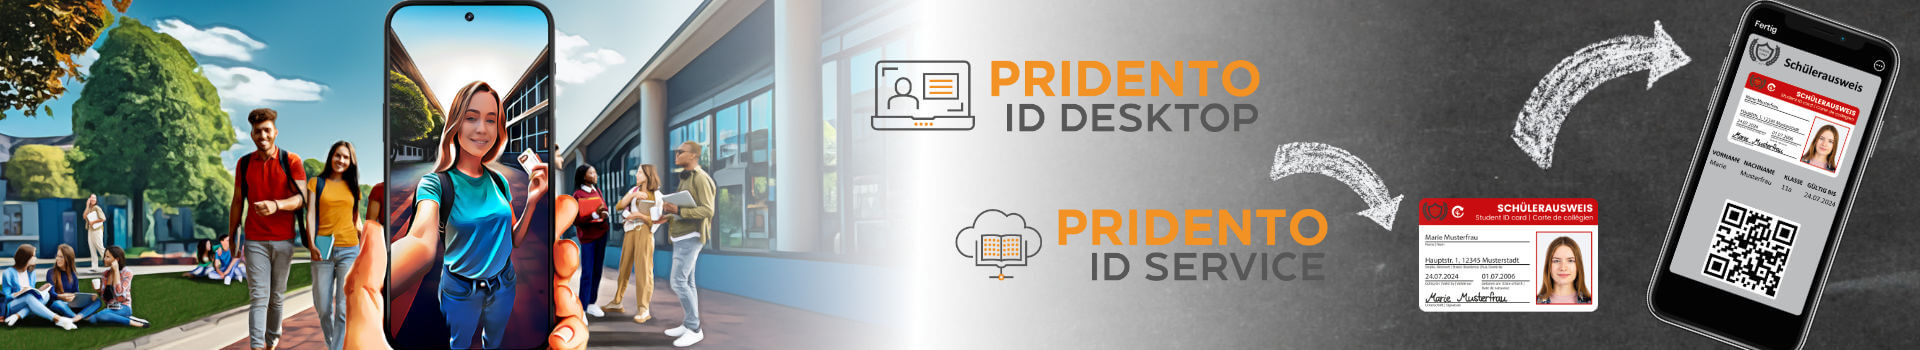 Pridento ID Schülerausweise Digital und Print